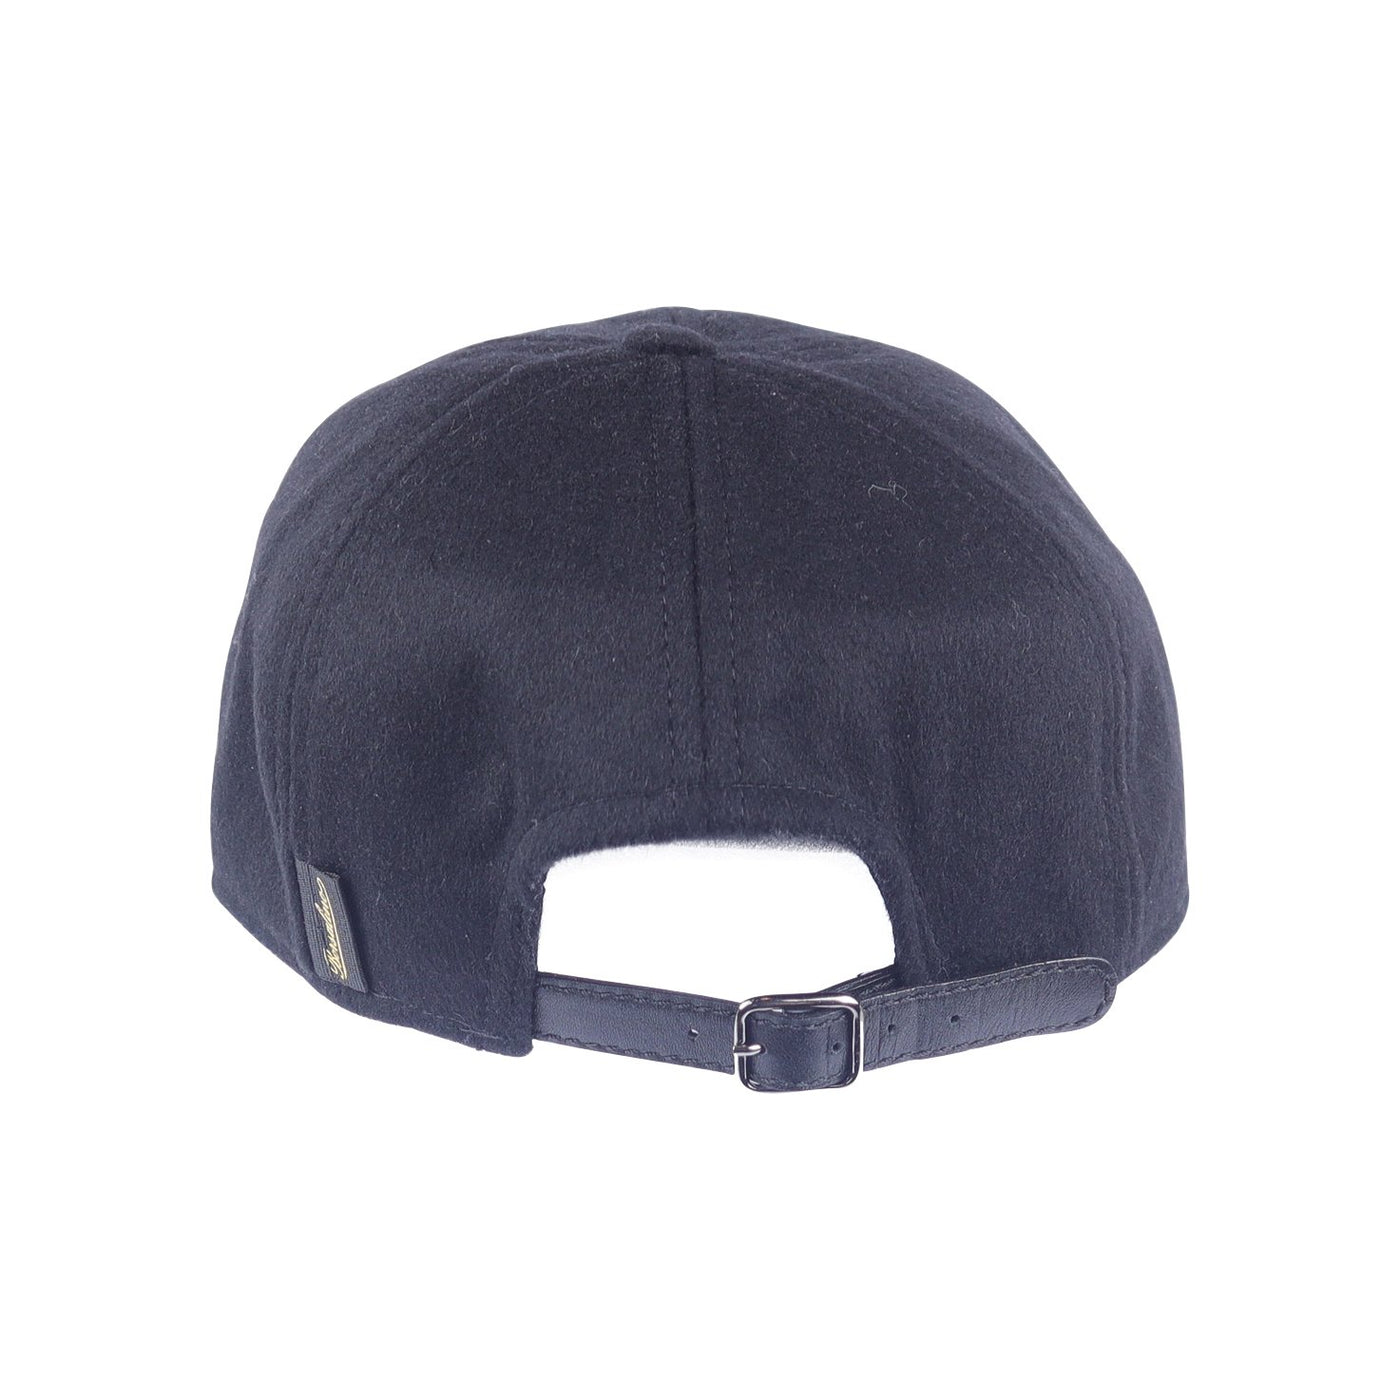 Lana Wool Cap - Black, product_type] - Borsalino for Atica fedora hat